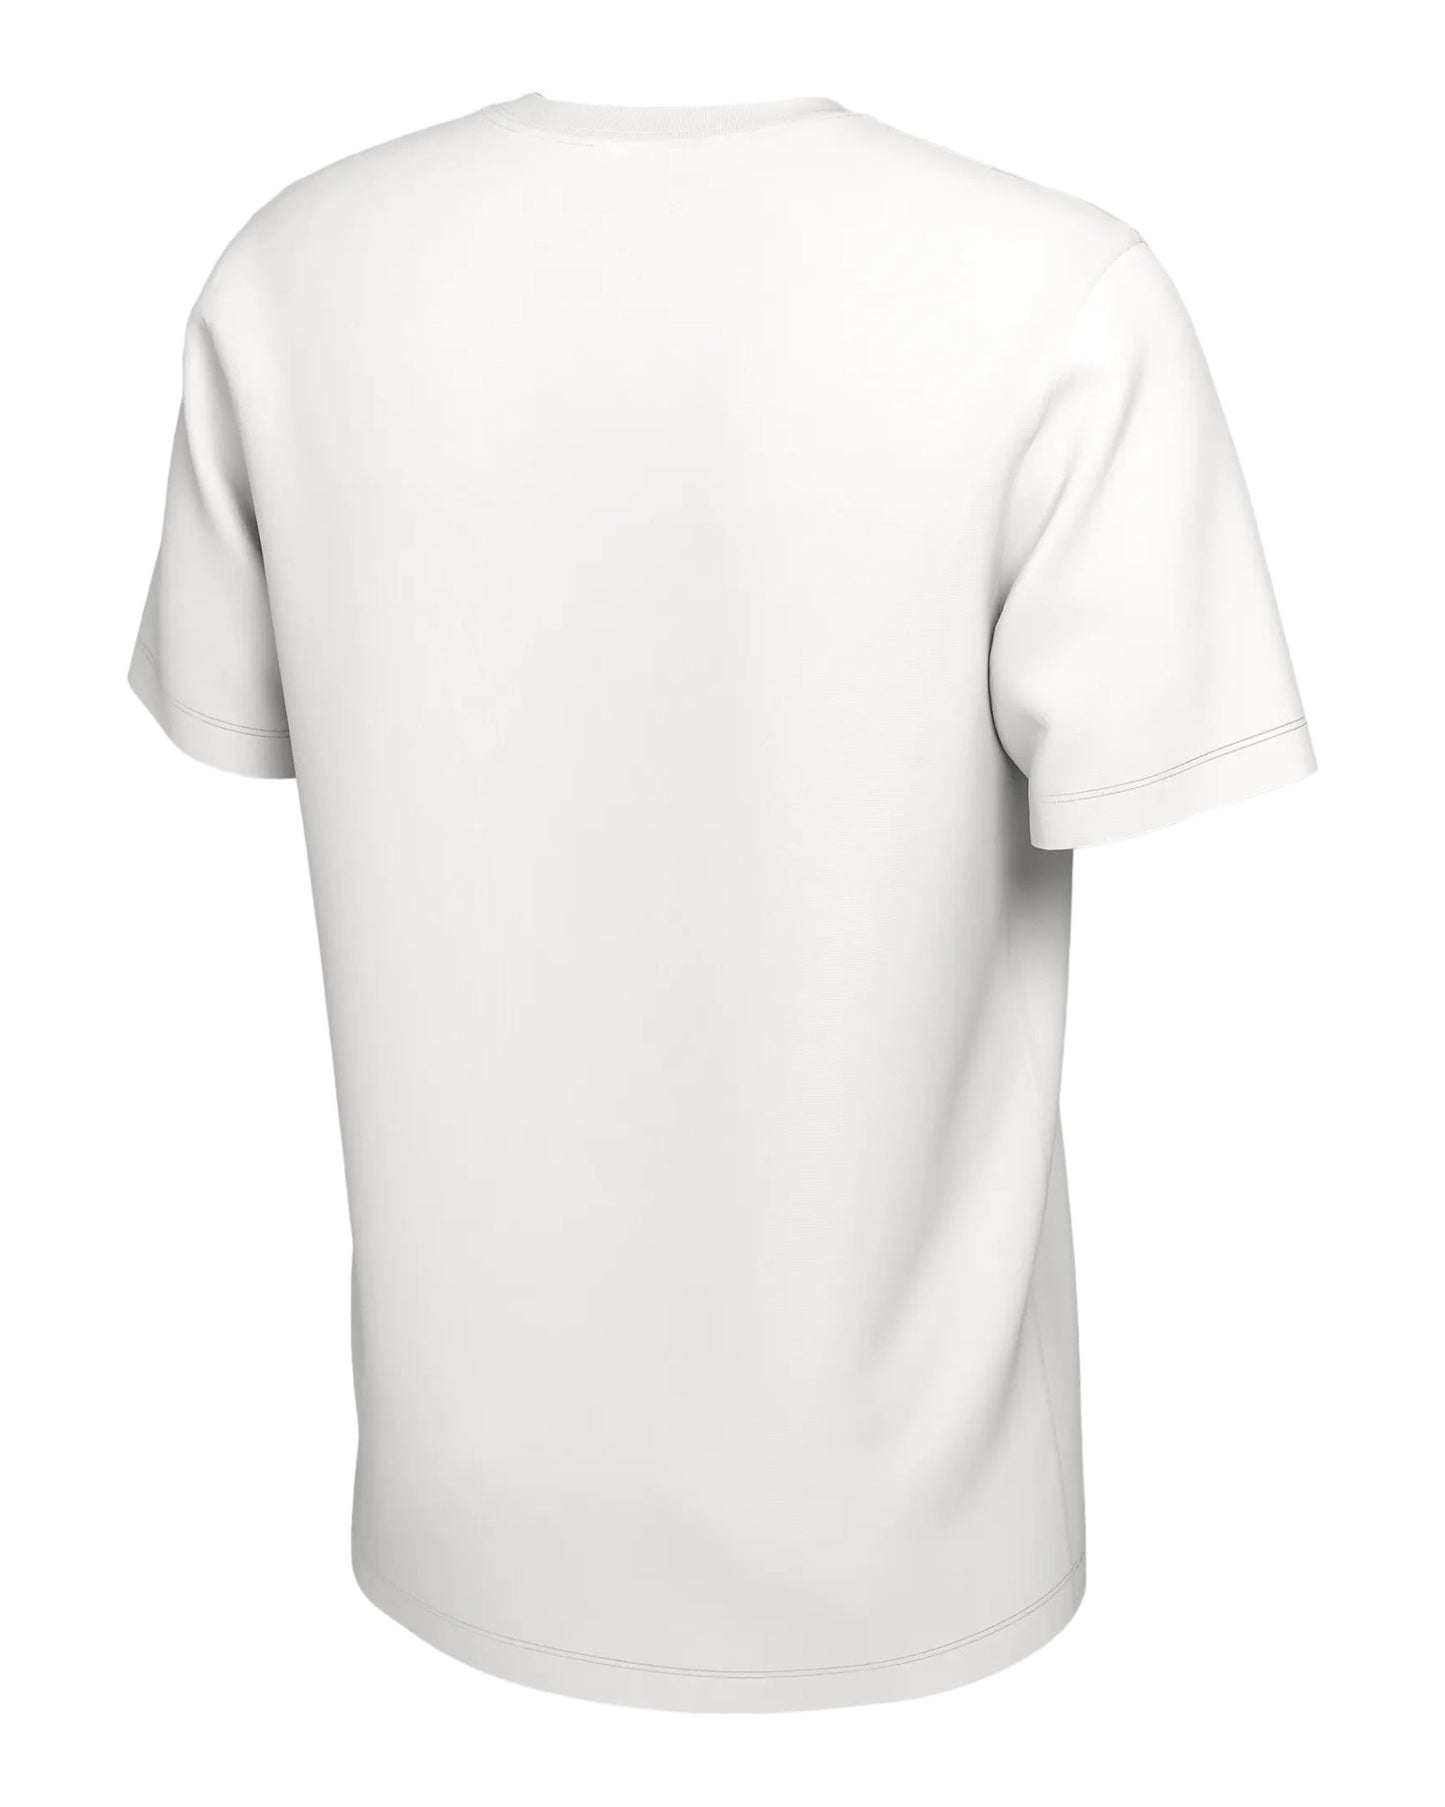 Fortnite x Nike Air Max Airphoria Men's T-Shirt White - Supra Sneakers